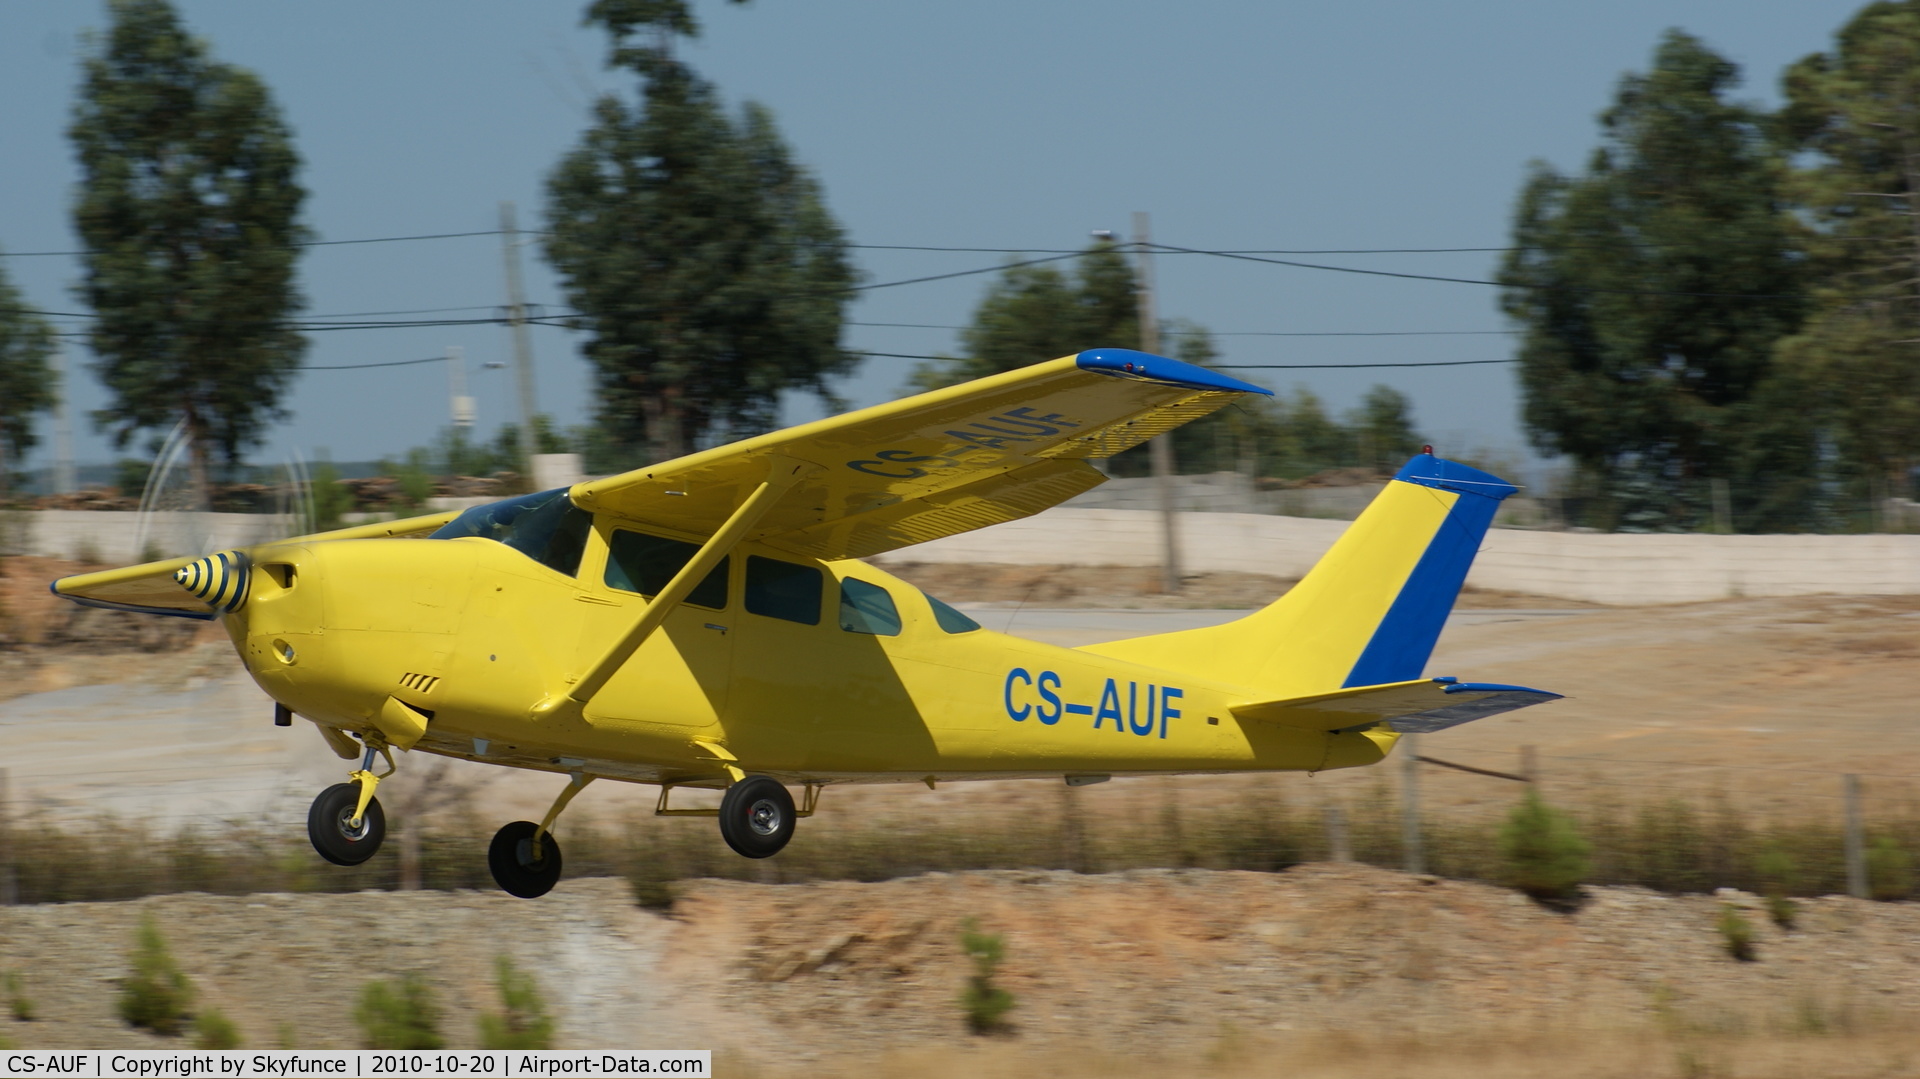 CS-AUF, Cessna TU206G 6 II Turbo Stationair C/N U20603577, Portugal, Proença-a-Nova airfield, Sky Fun Center Skydiving school.